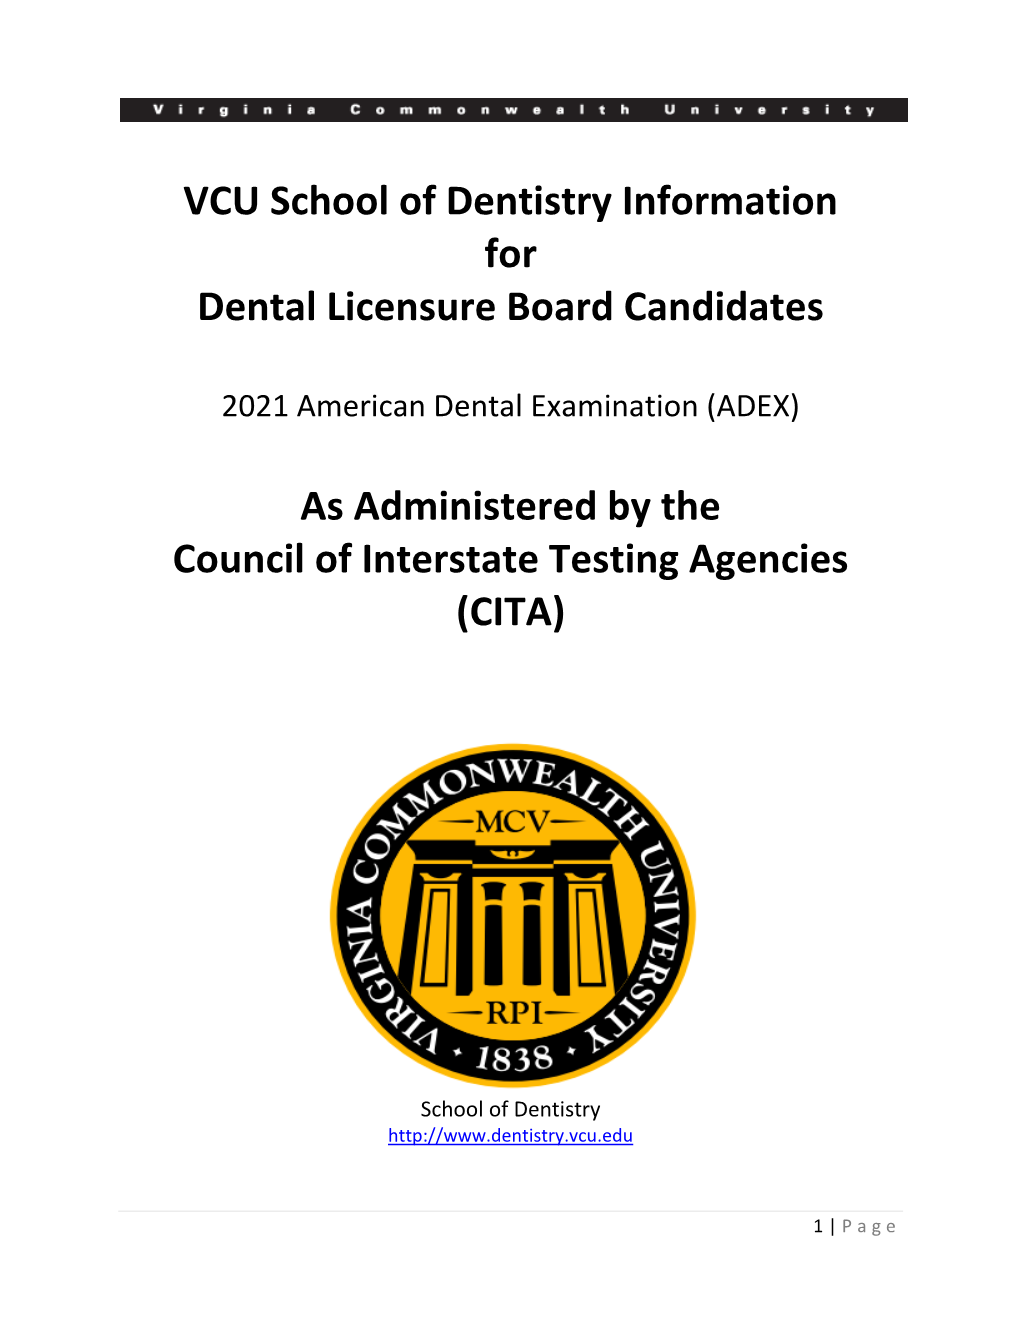 VCU School of Dentistry Information for Dental Licensure Board Candidates